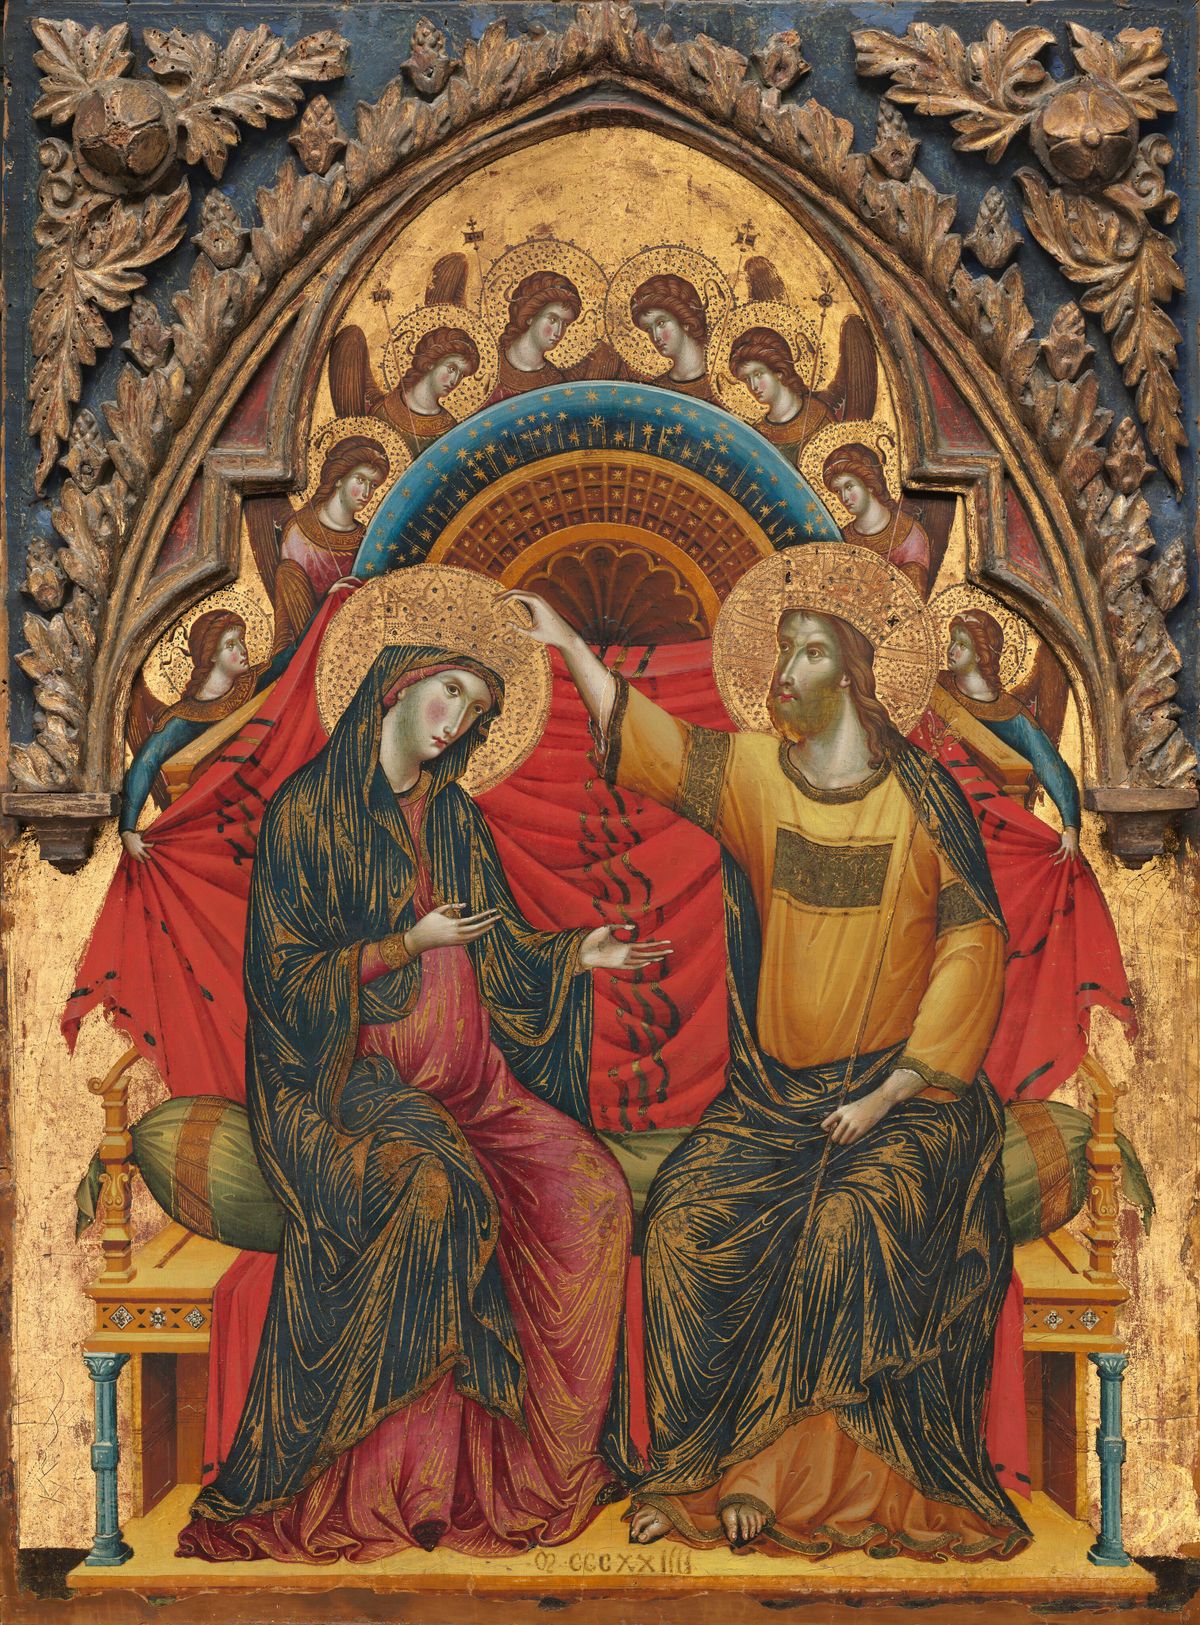 The Coronation of the Virgin by Master of the Washington Coronation (1324) - Public Domain Catholic Painting